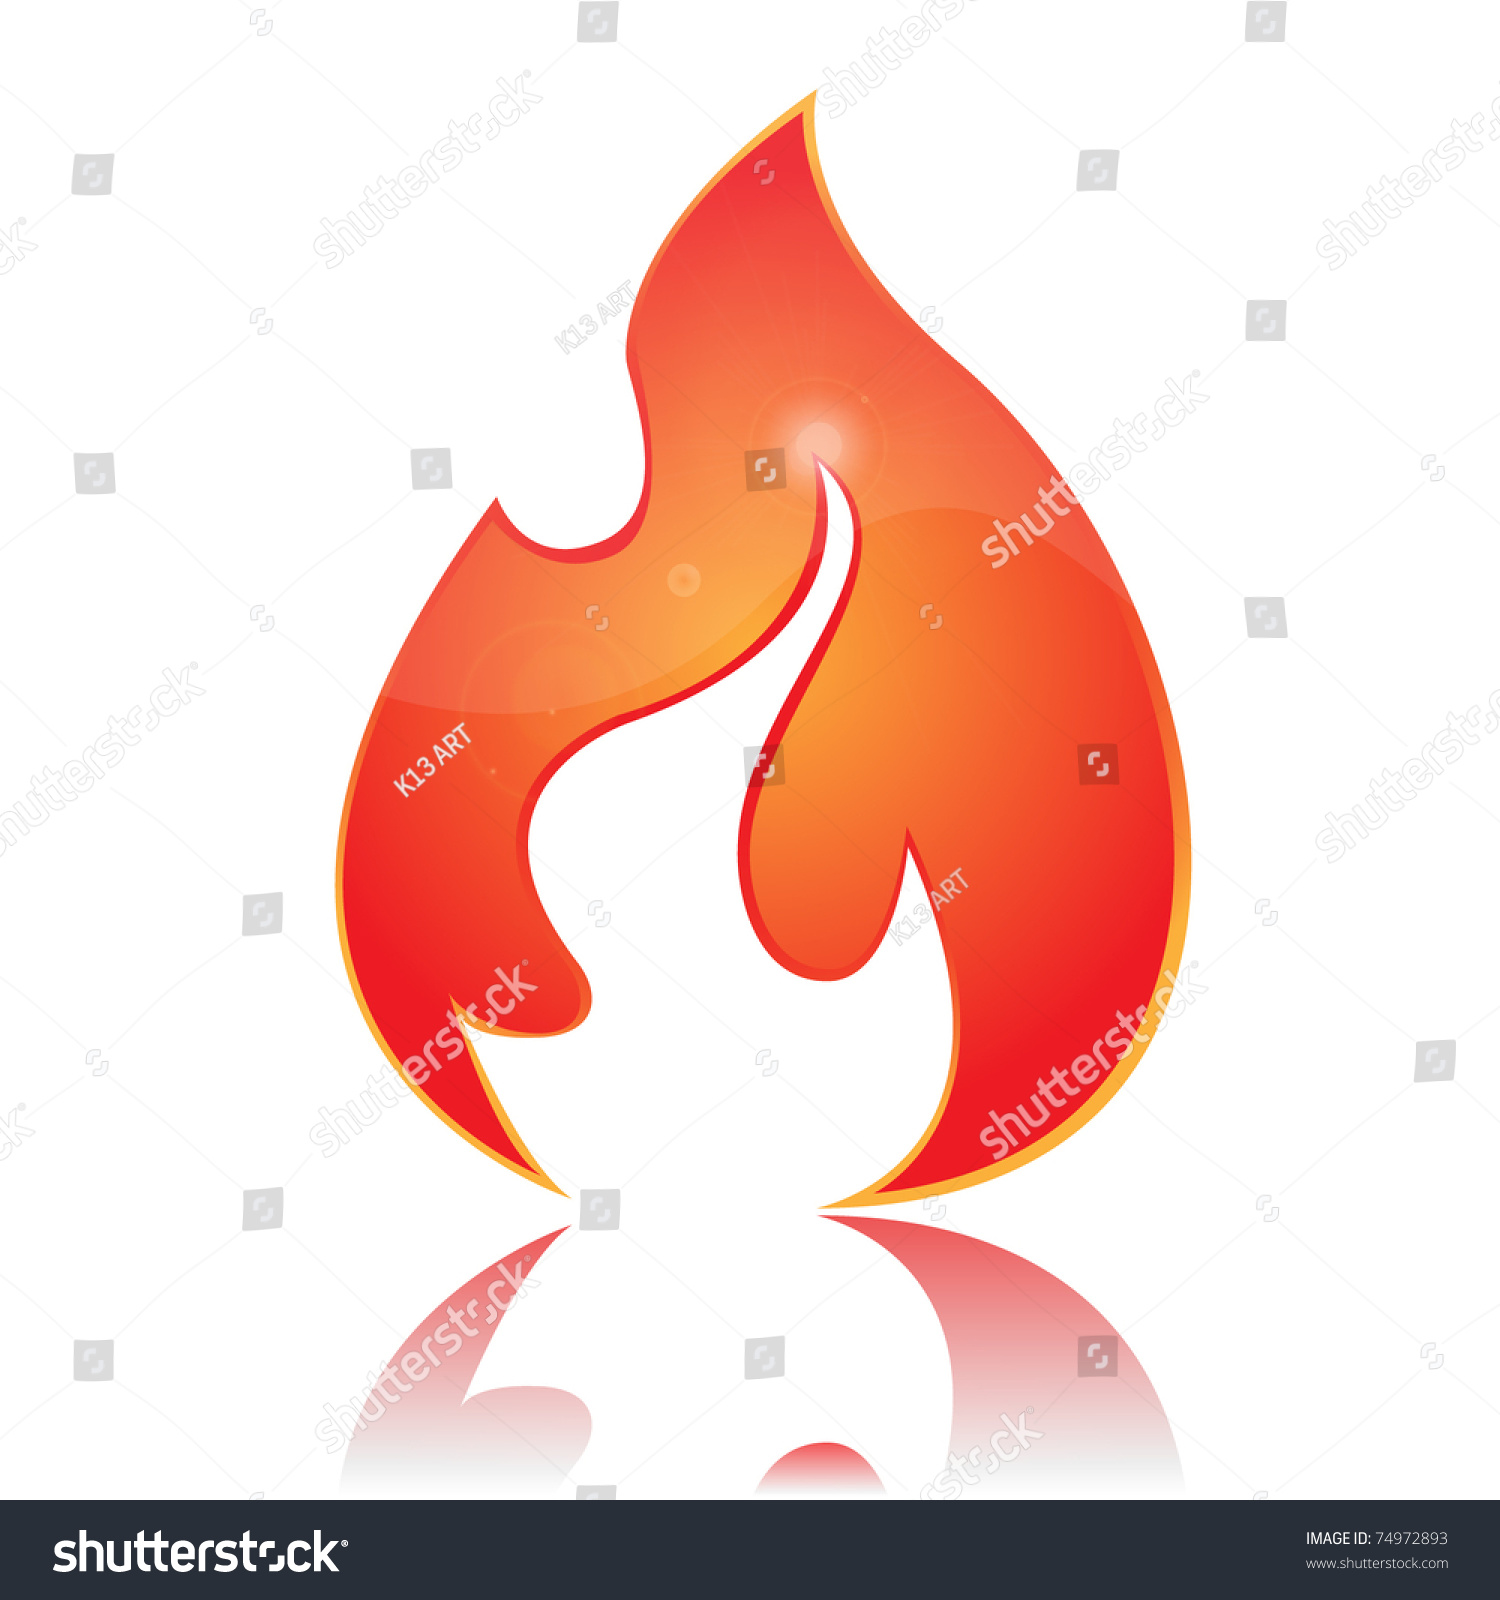 Flame - Vector - 74972893 : Shutterstock